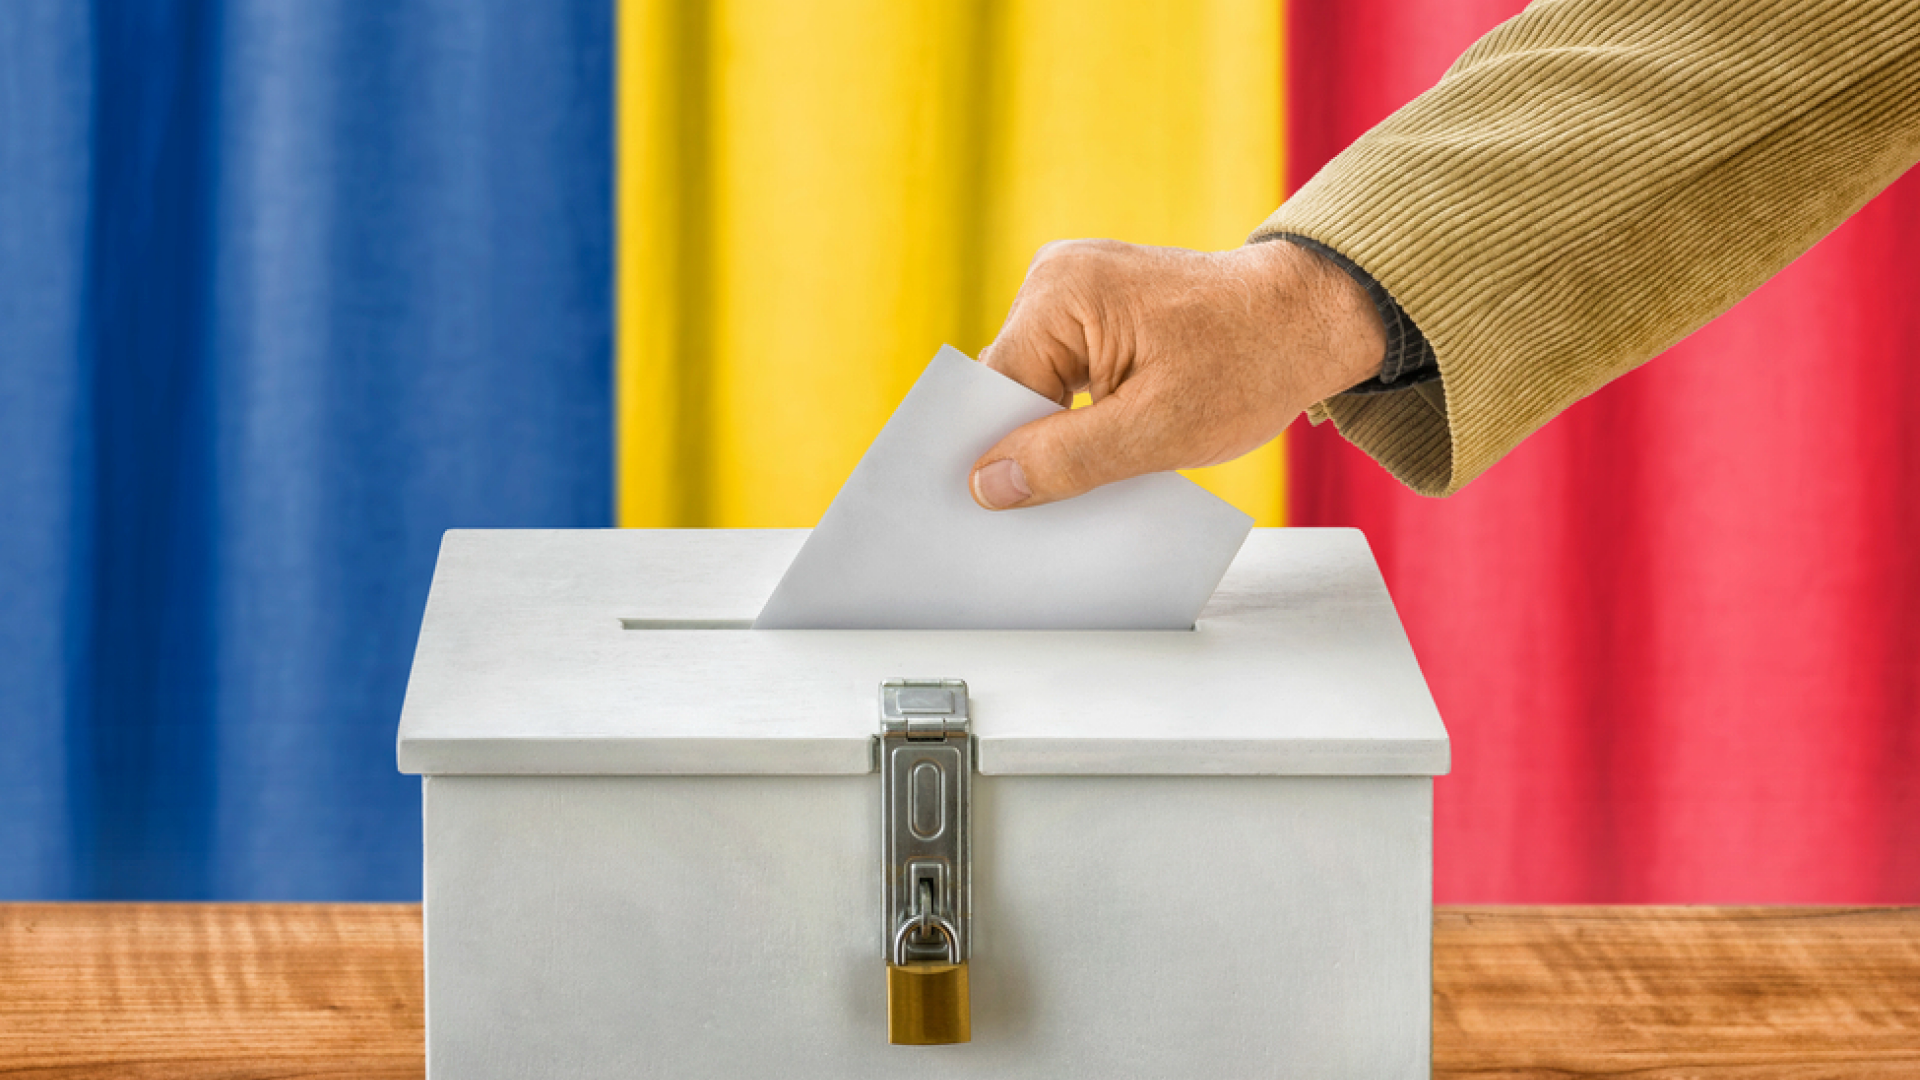 vot in Romania - Shutterstock